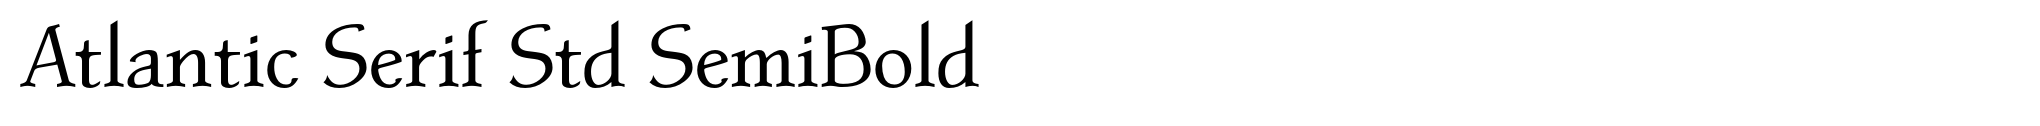 Atlantic Serif Std SemiBold image